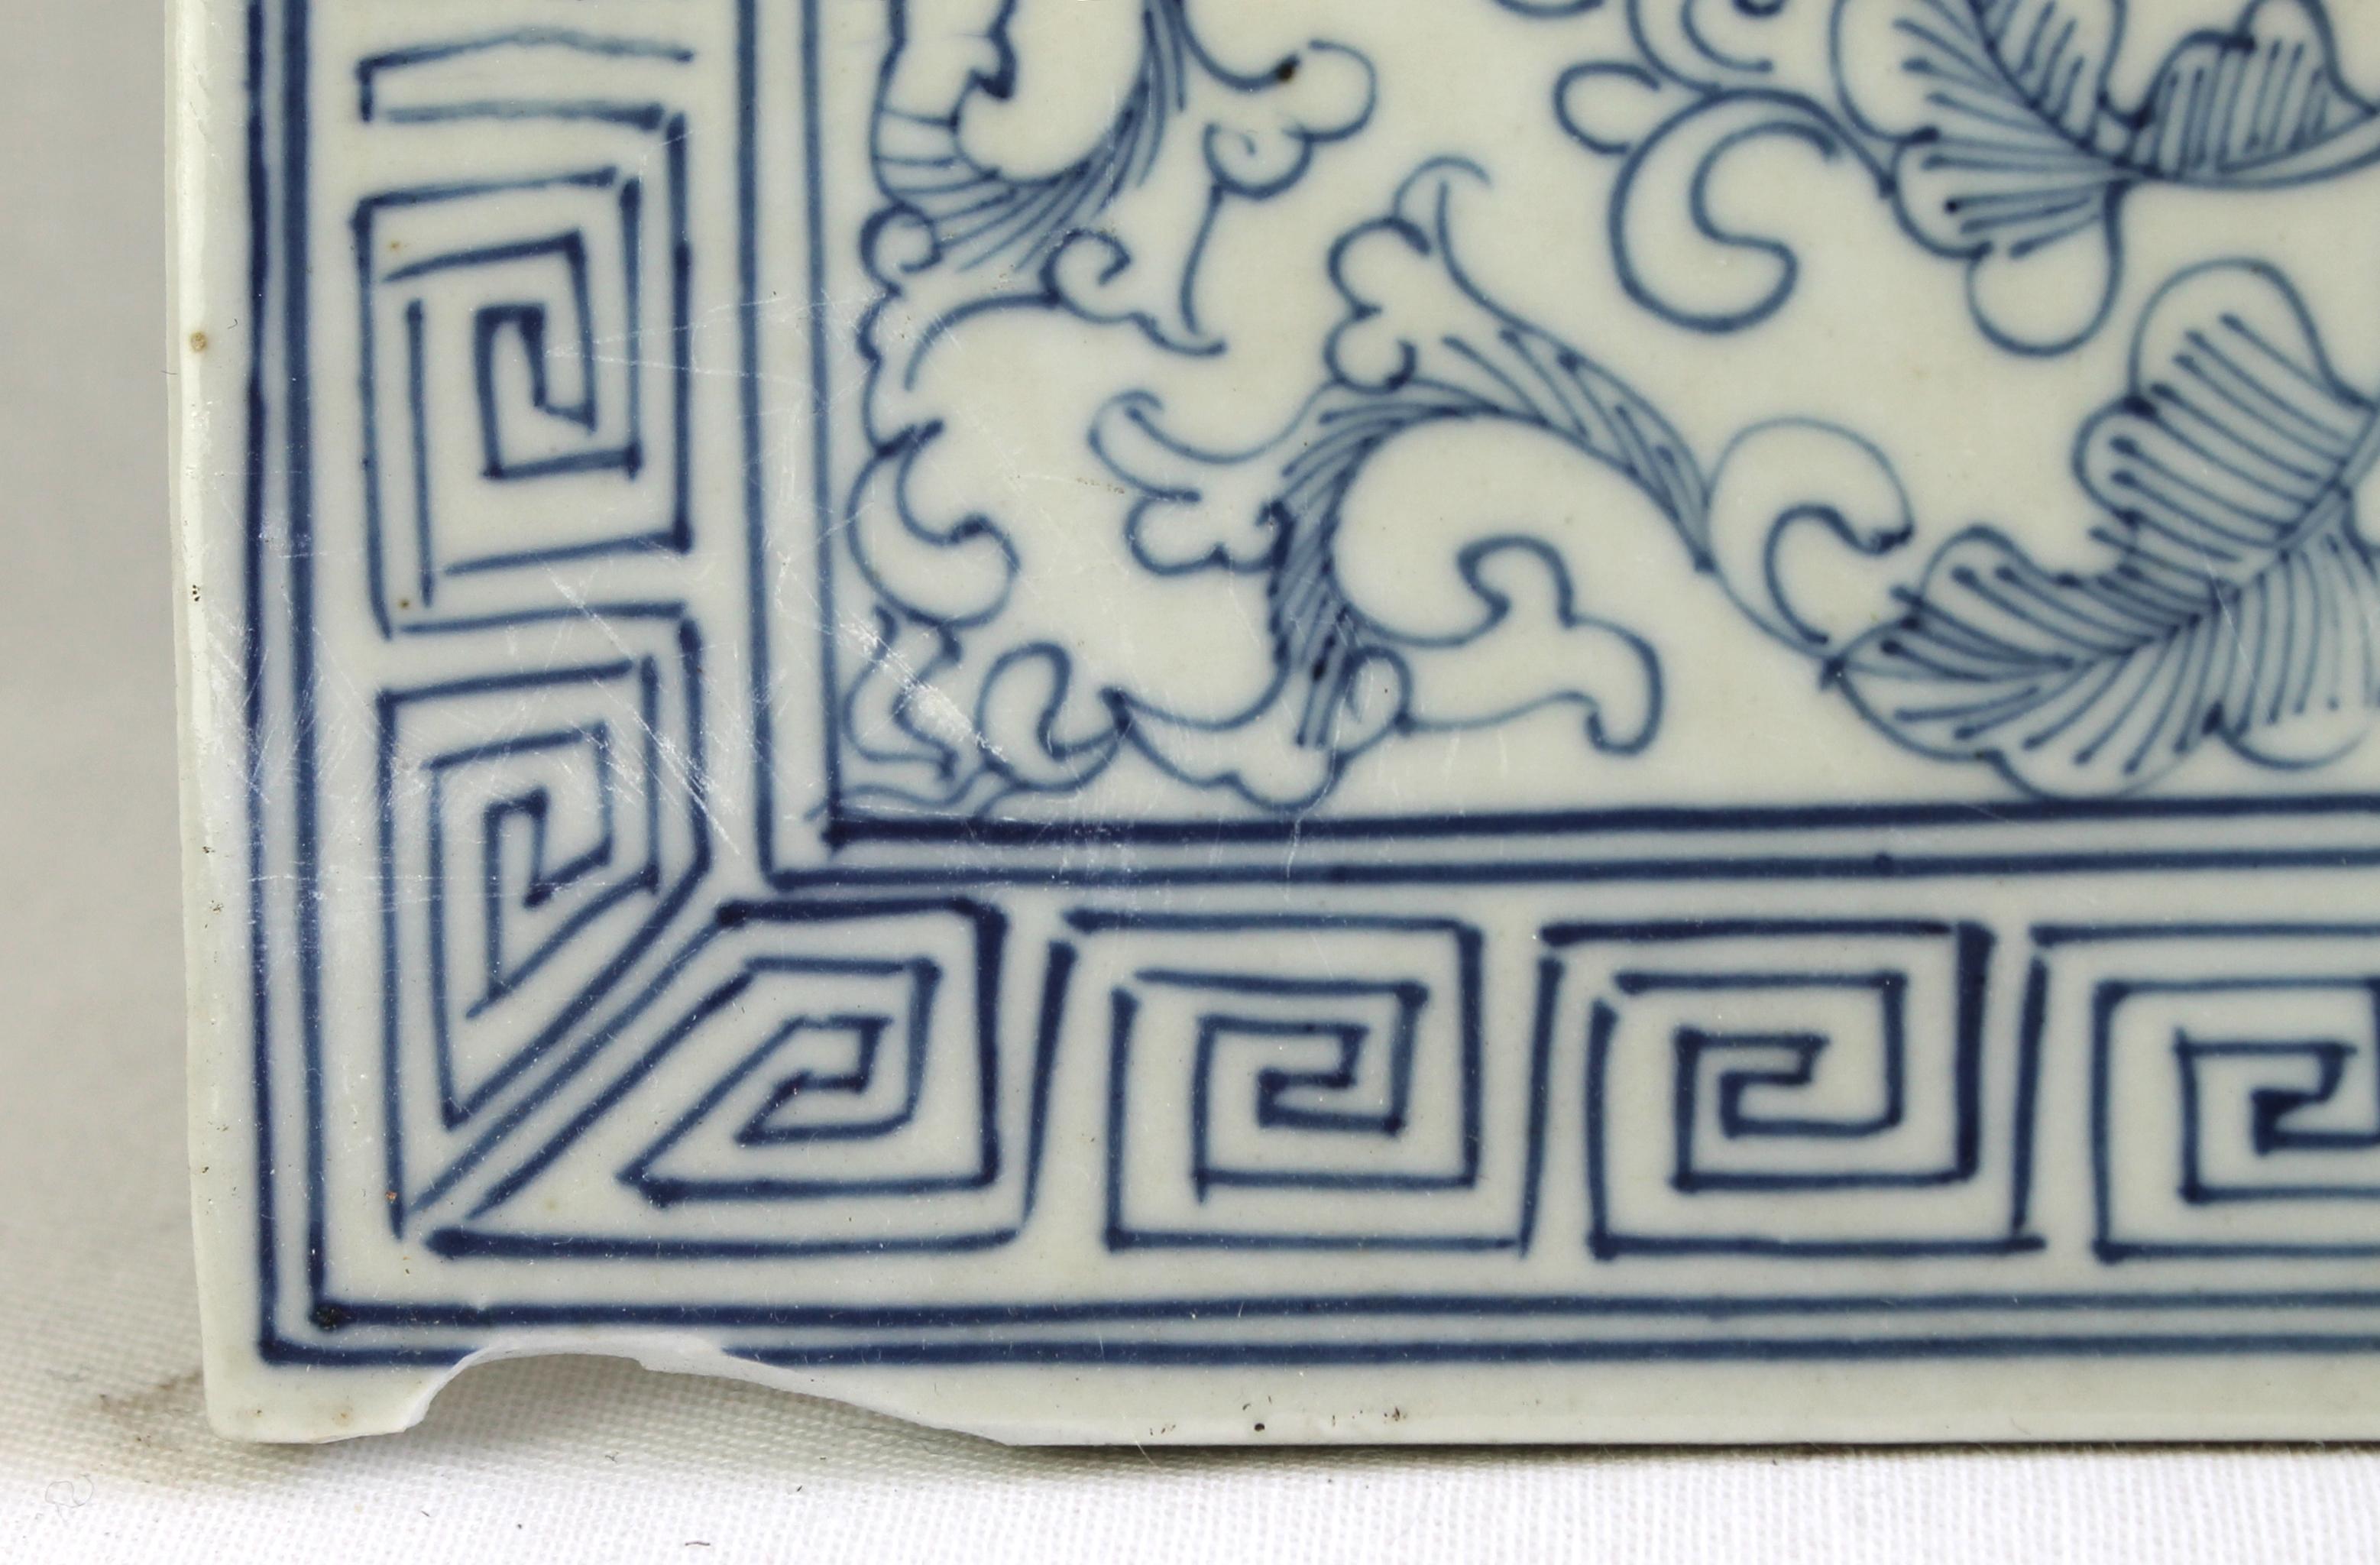 European porcelain hand-painted blue and white tile tile.
Measures: 13.5